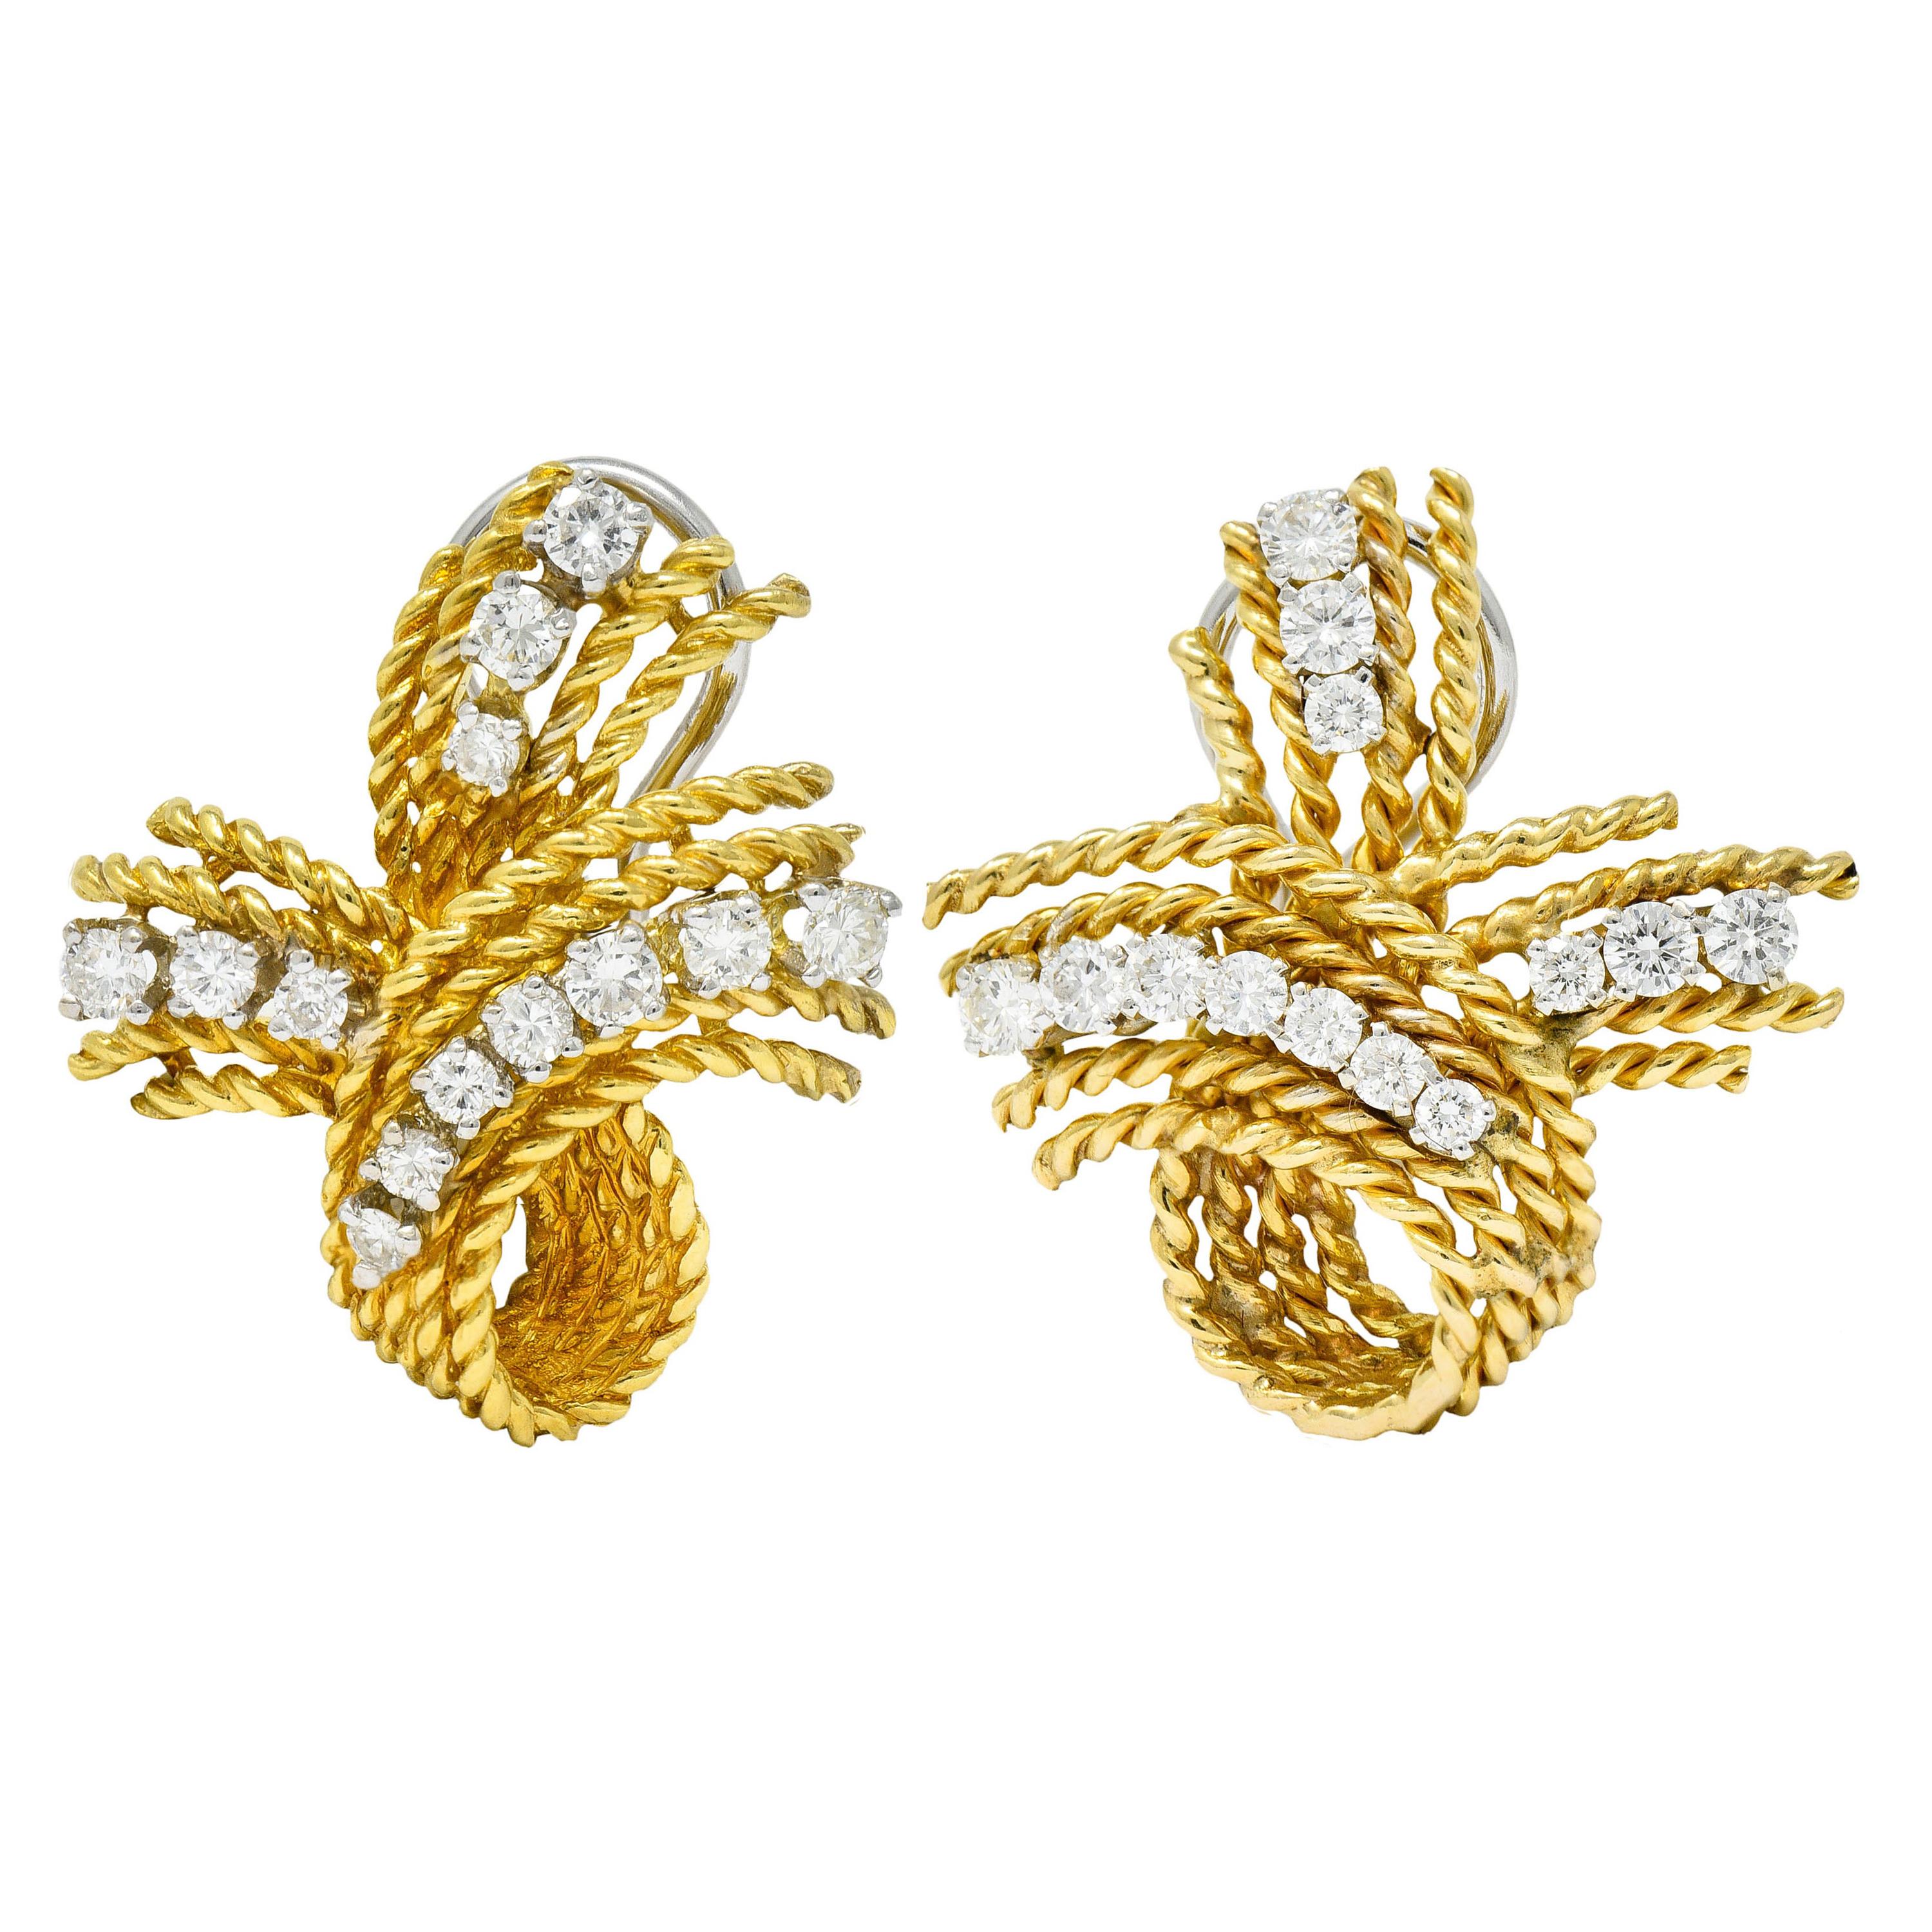 1950's Mid-Century 1.45 Carats Diamond 18 Karat Two-Tone Gold Twisted Earrings